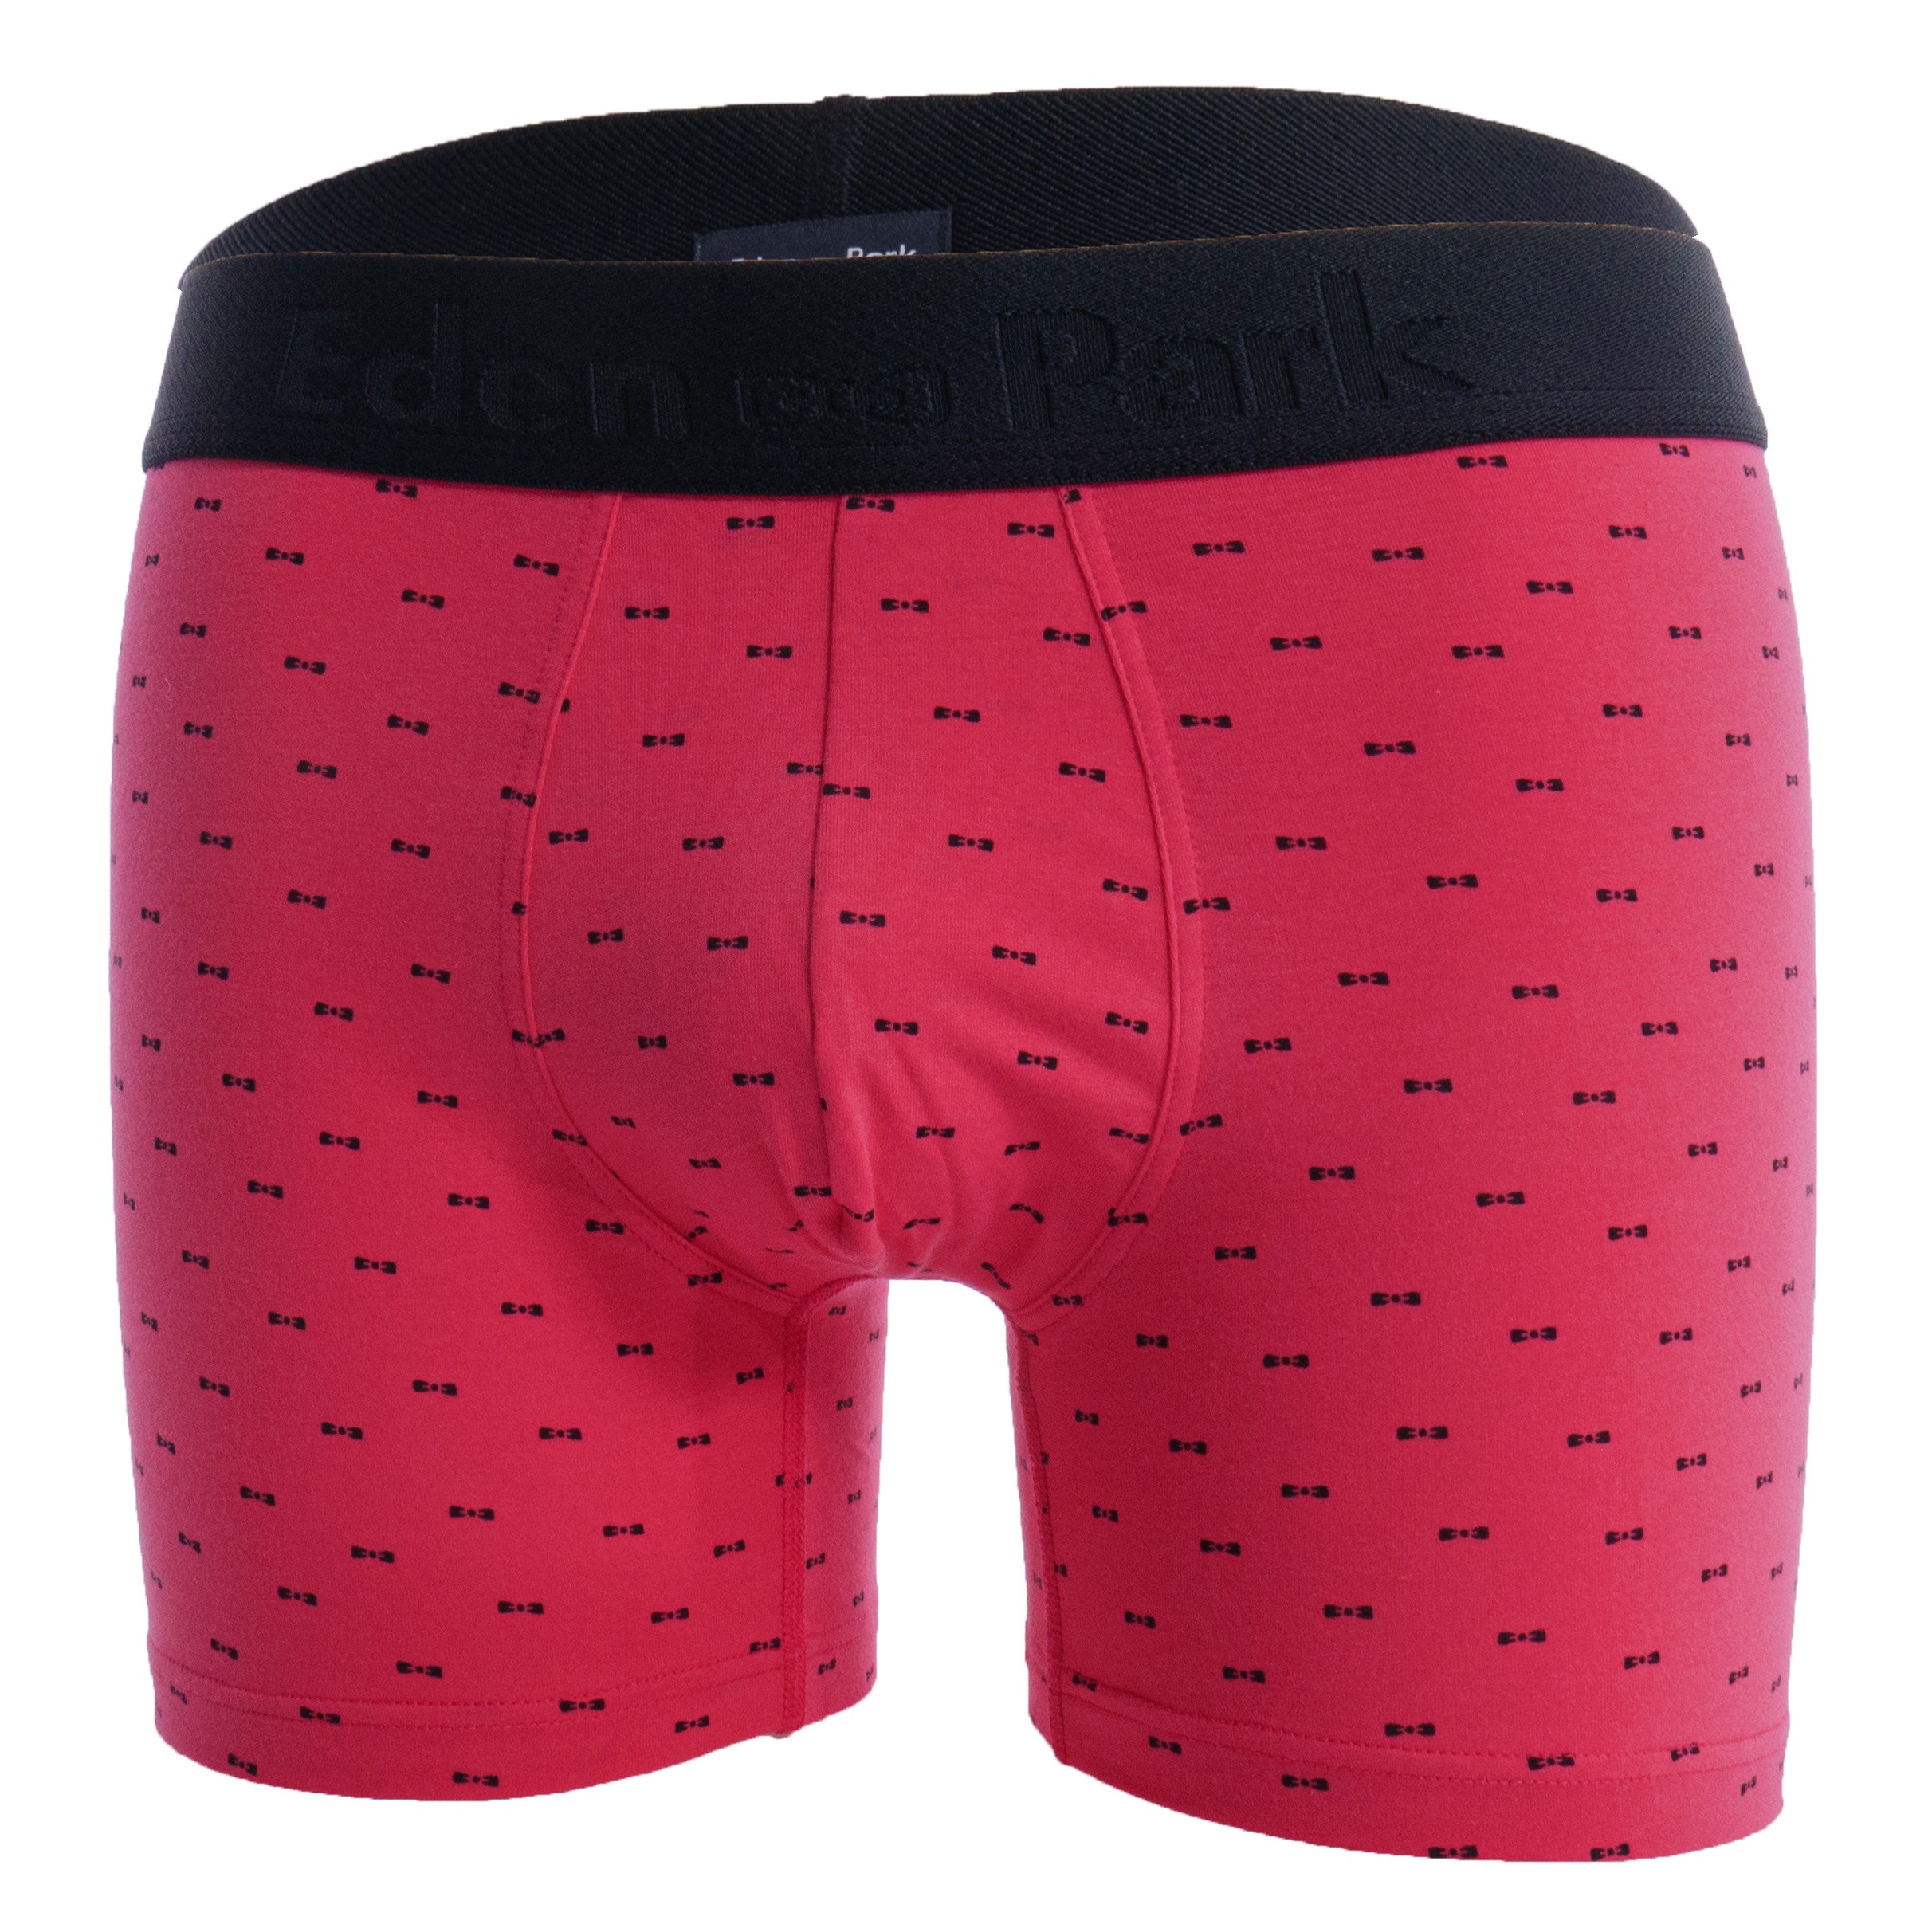 Boxer Eden Park bow tie pattern - pink: Boxers for man brand Eden P